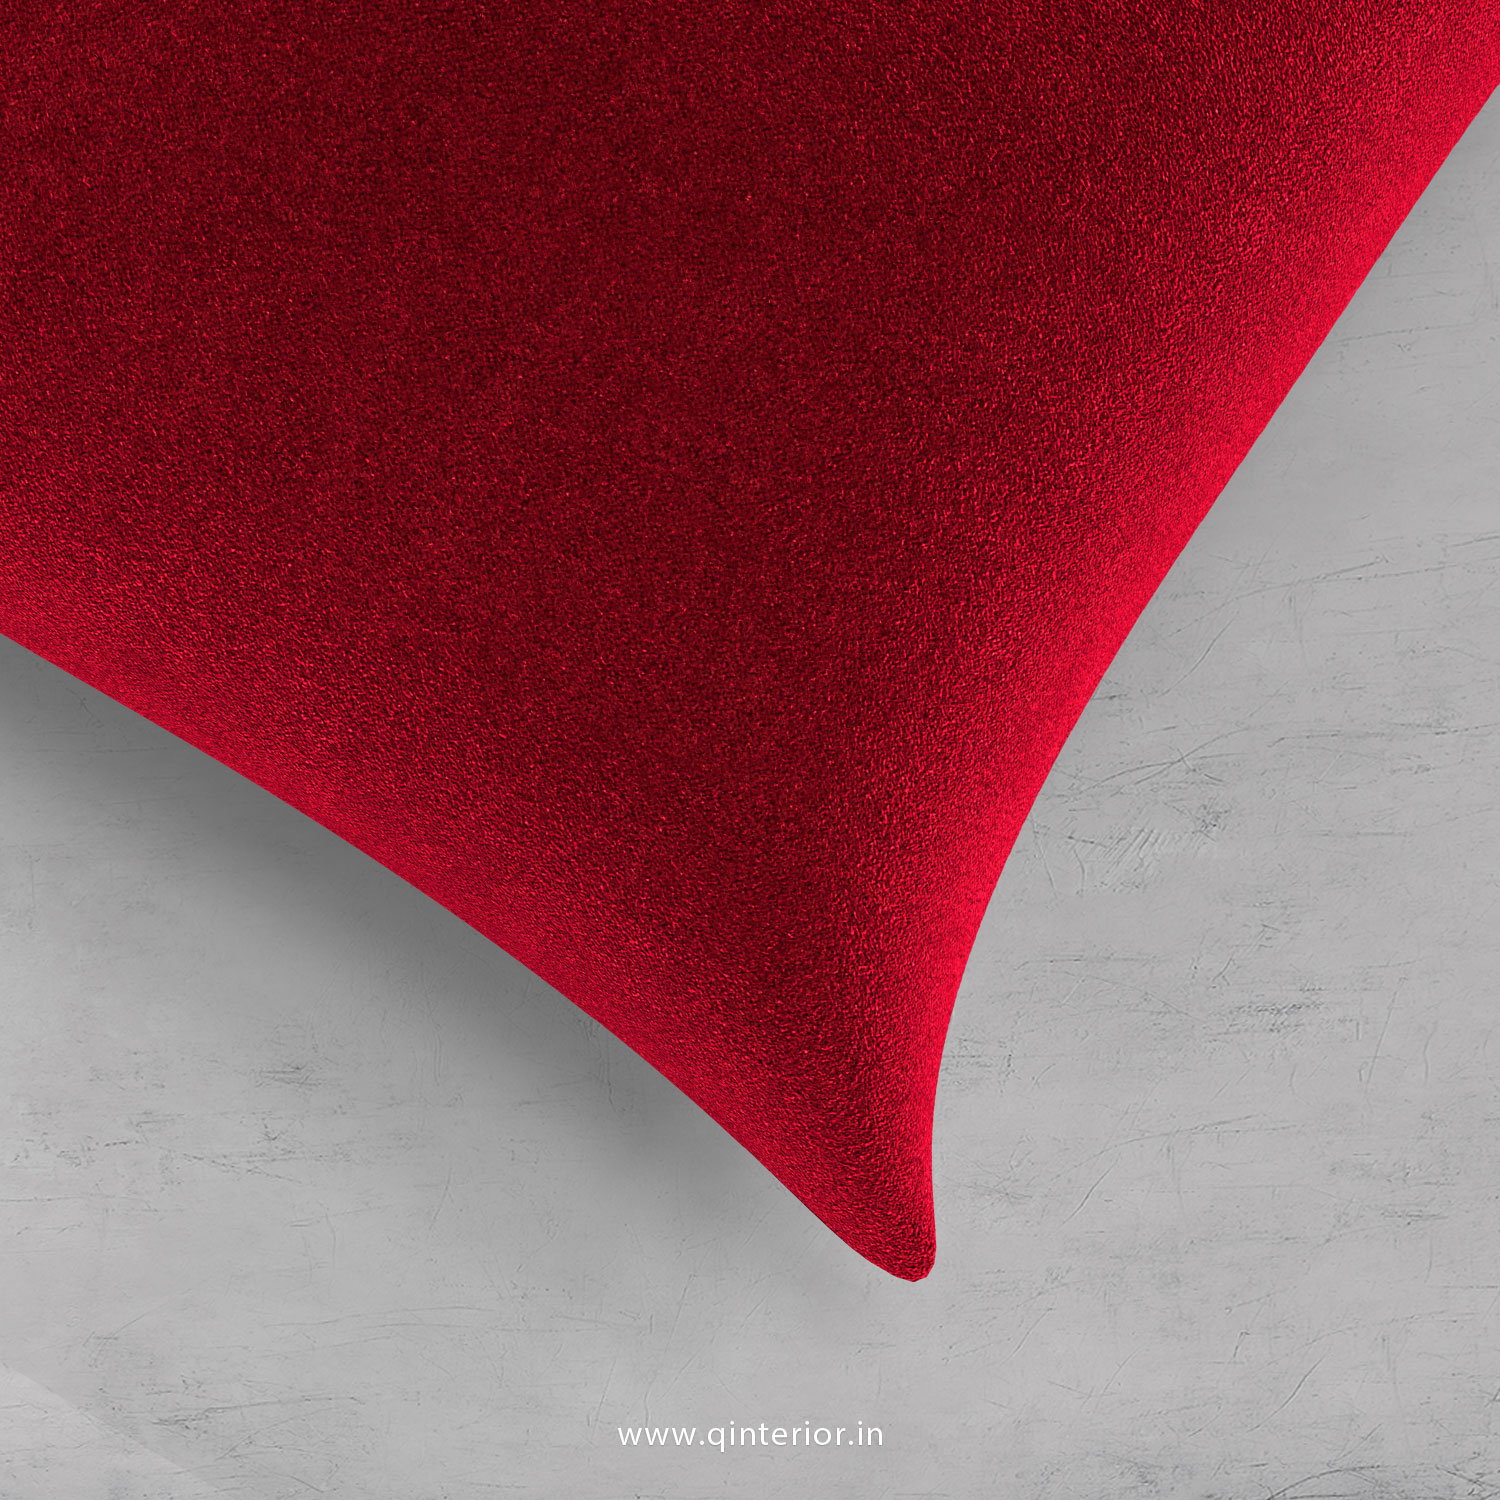 Cushion With Cushion Cover in Velvet Fabric- CUS001 FL08